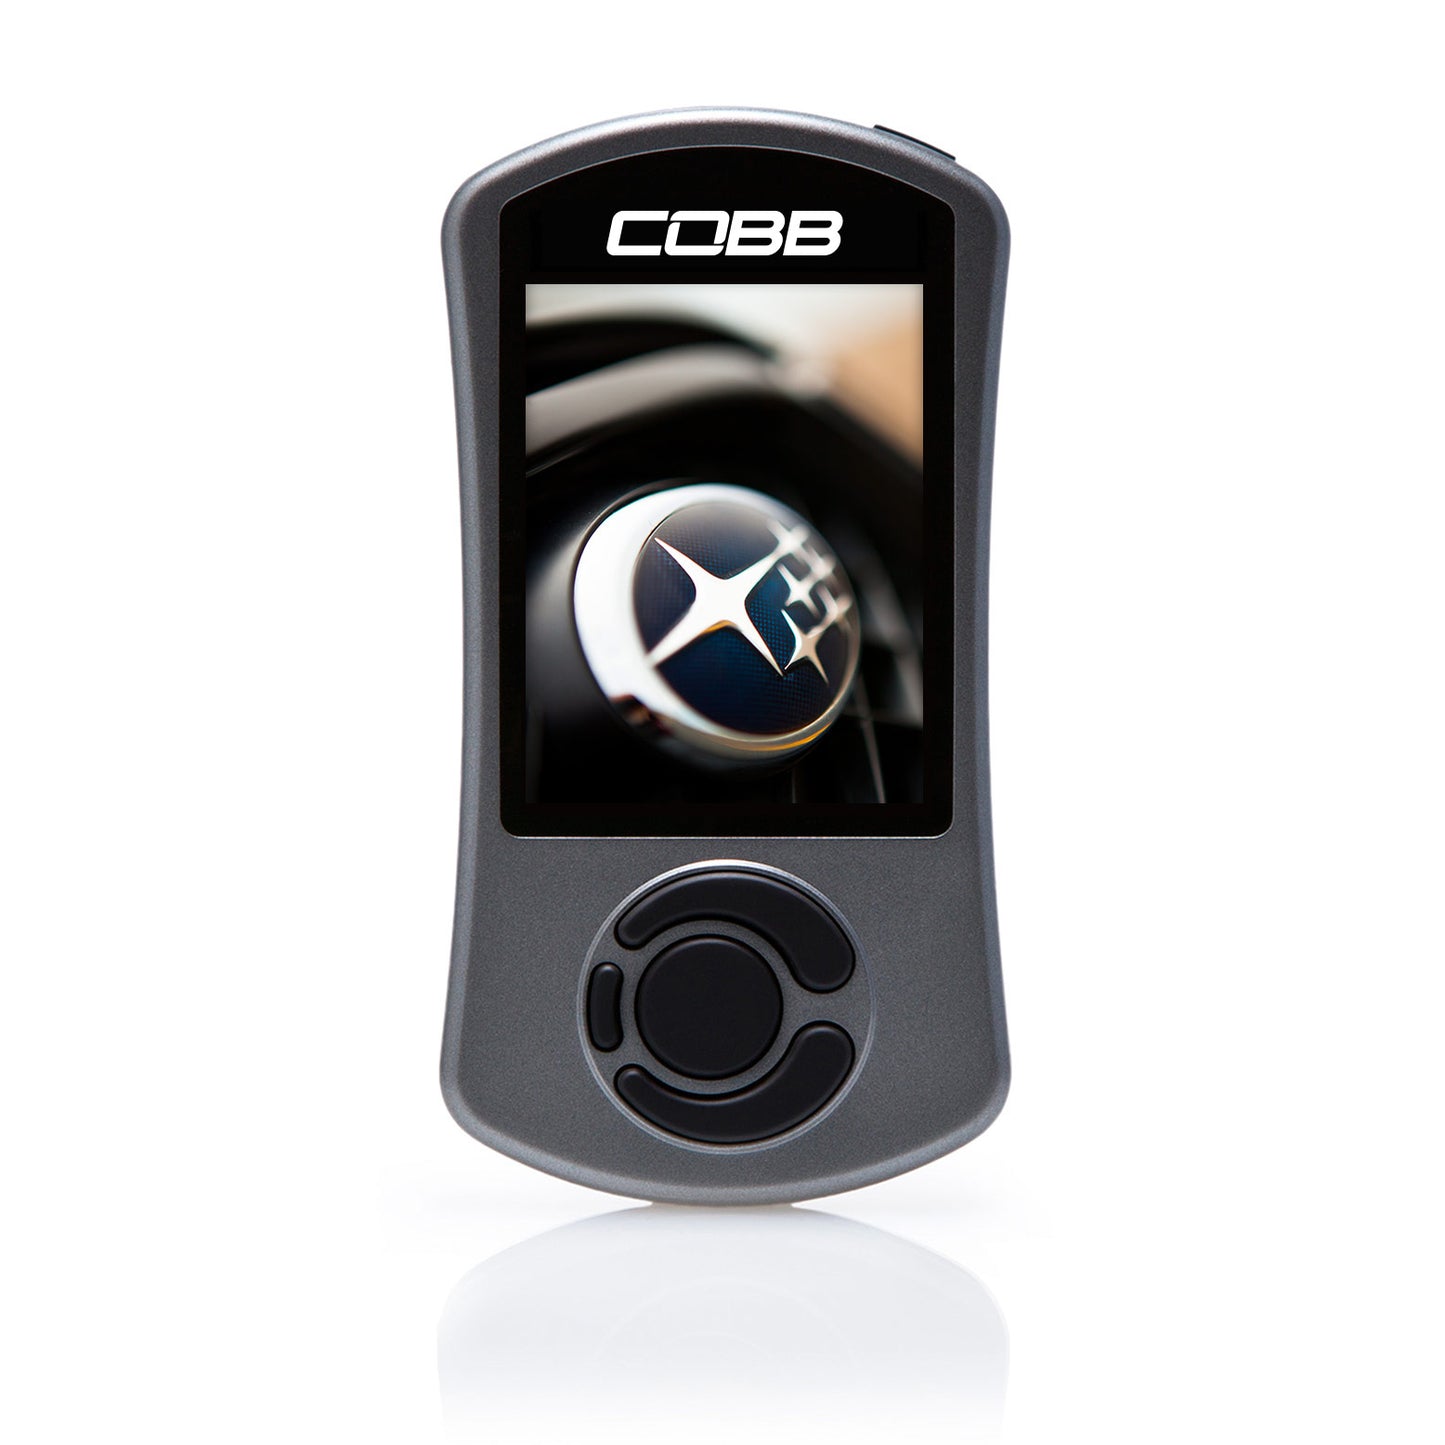 2004 - 2007 Subaru STI Cobb AccessPort Tuning Basemap Service